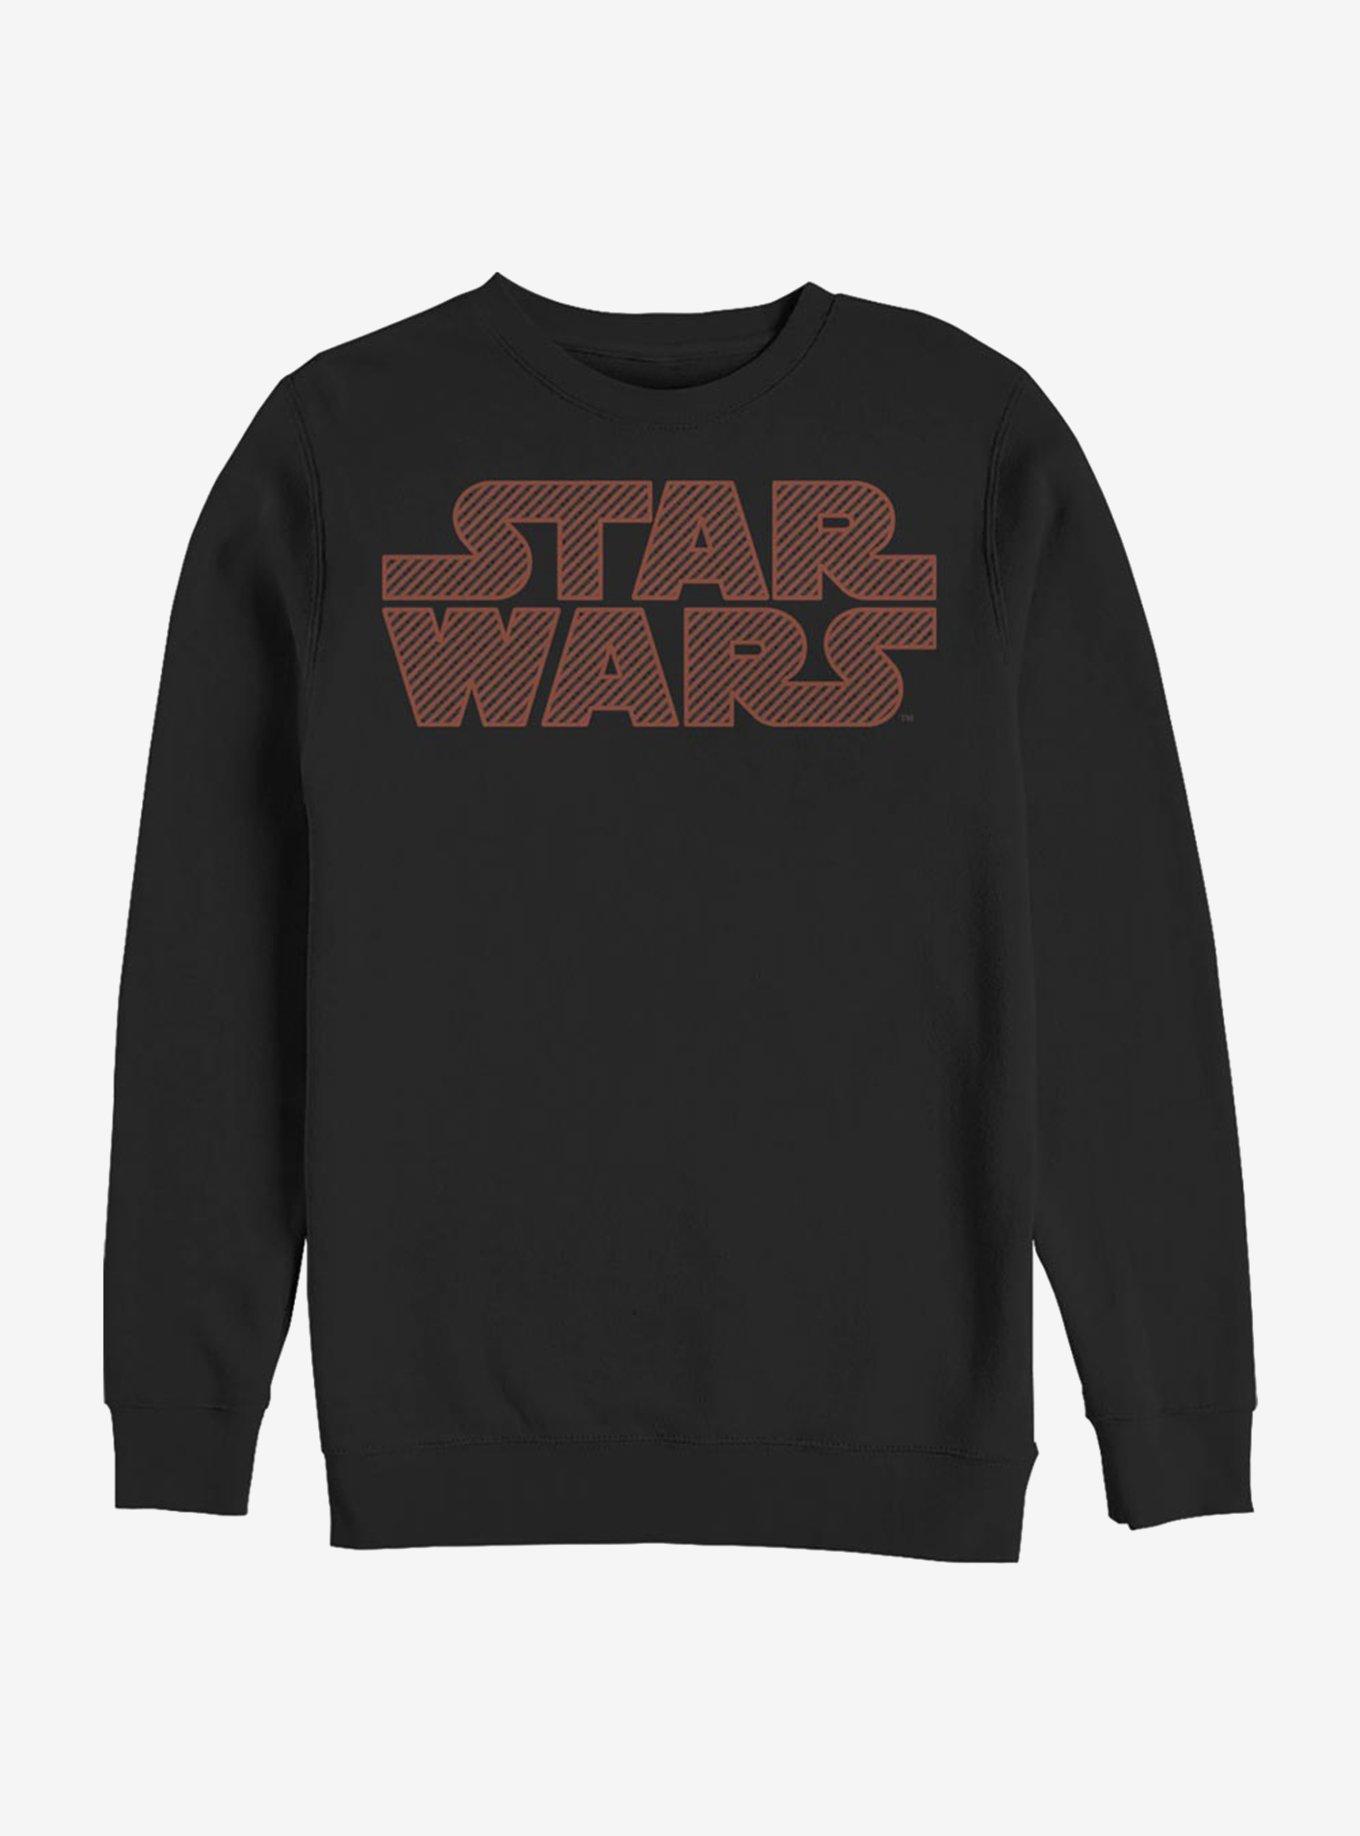 Star Wars Striped Logo Sweatshirt, BLACK, hi-res